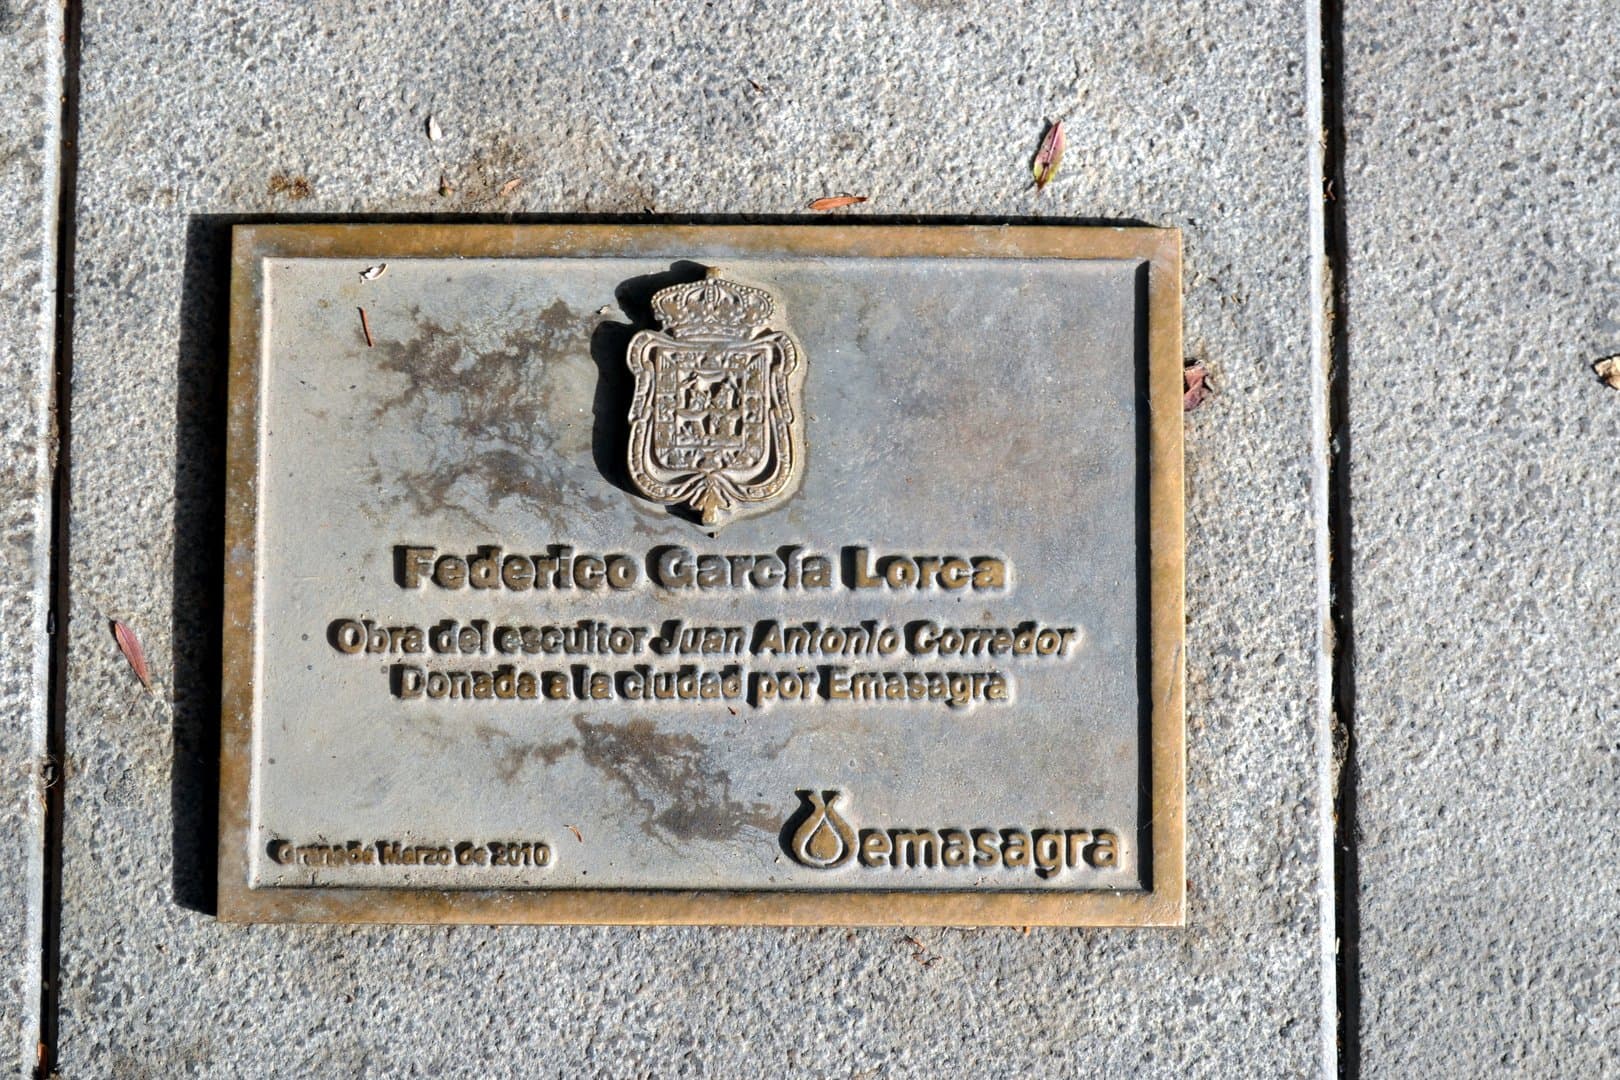 Free Federico Garcia Lorca Tour Granada1